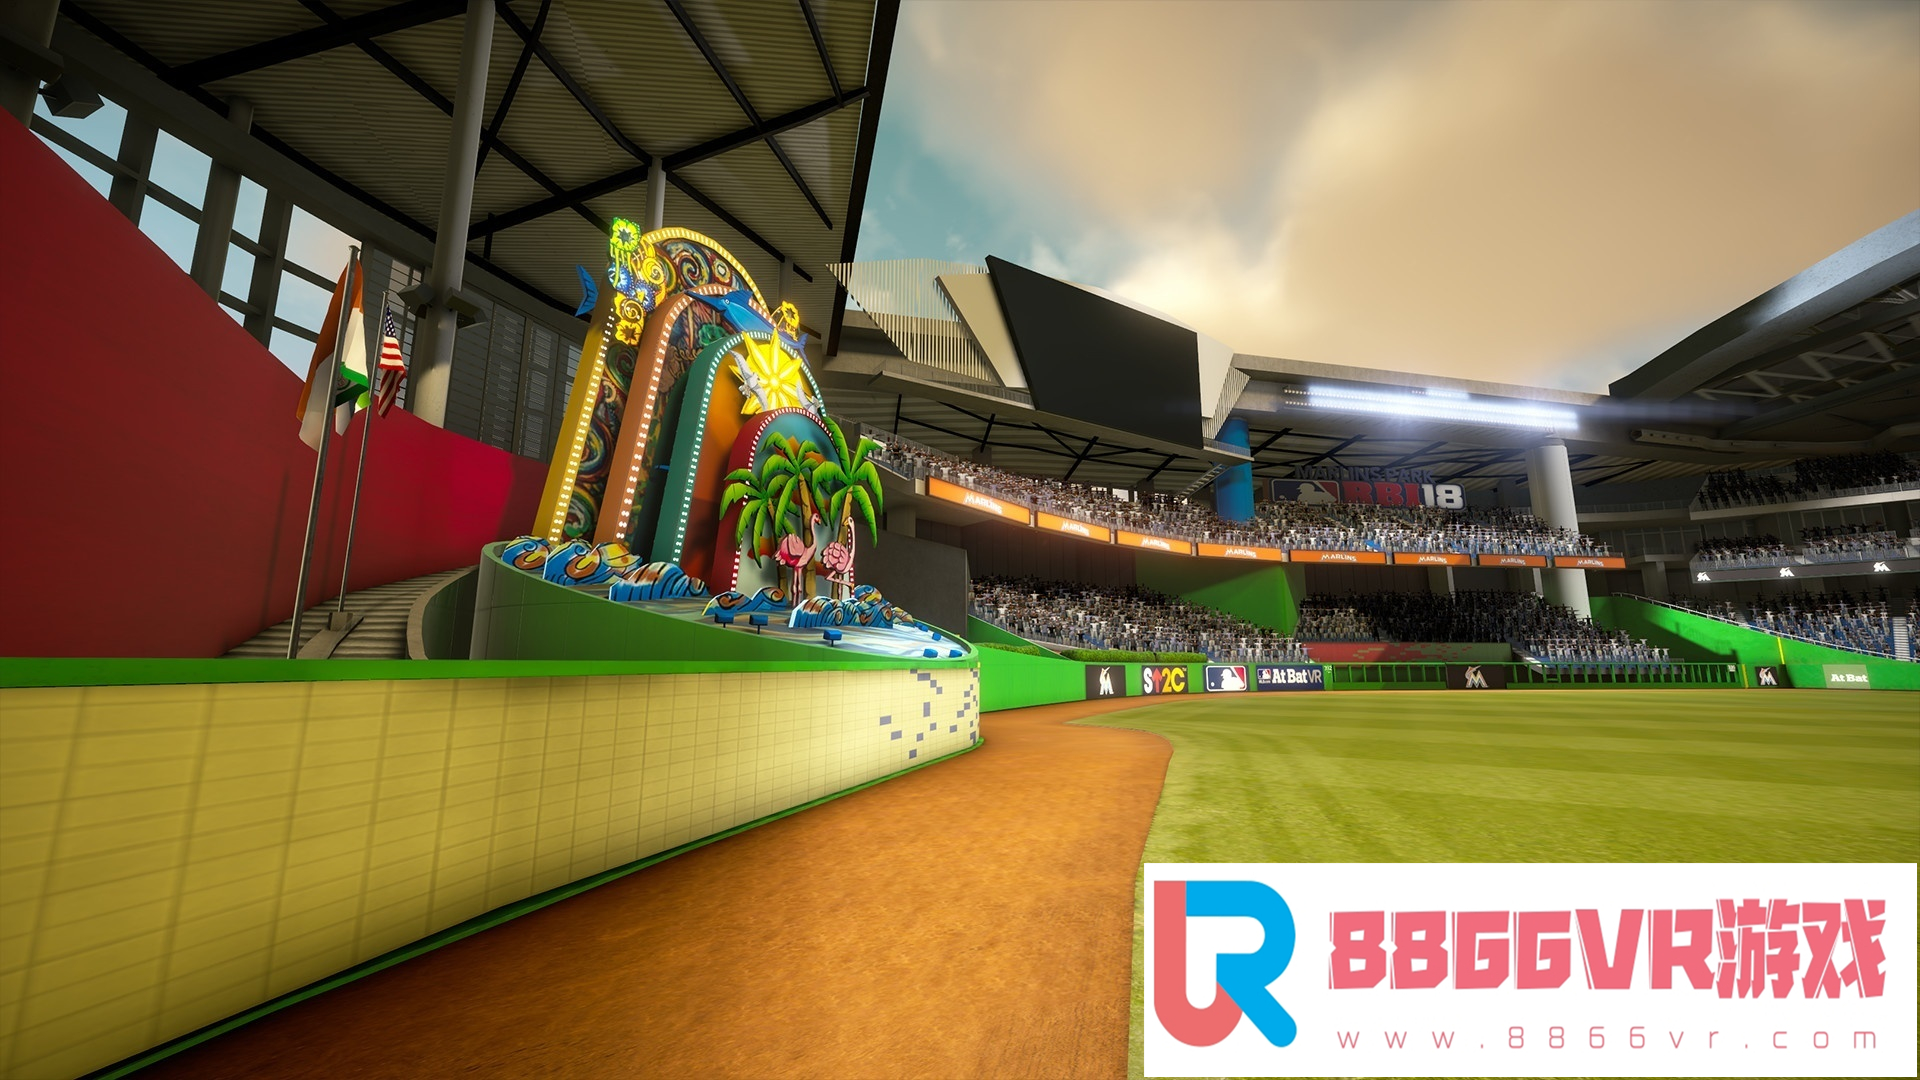 [VR交流学习] MLB本垒打 VR (MLB Home Run Derby VR) vr game crack2529 作者:蜡笔小猪 帖子ID:1098 破解